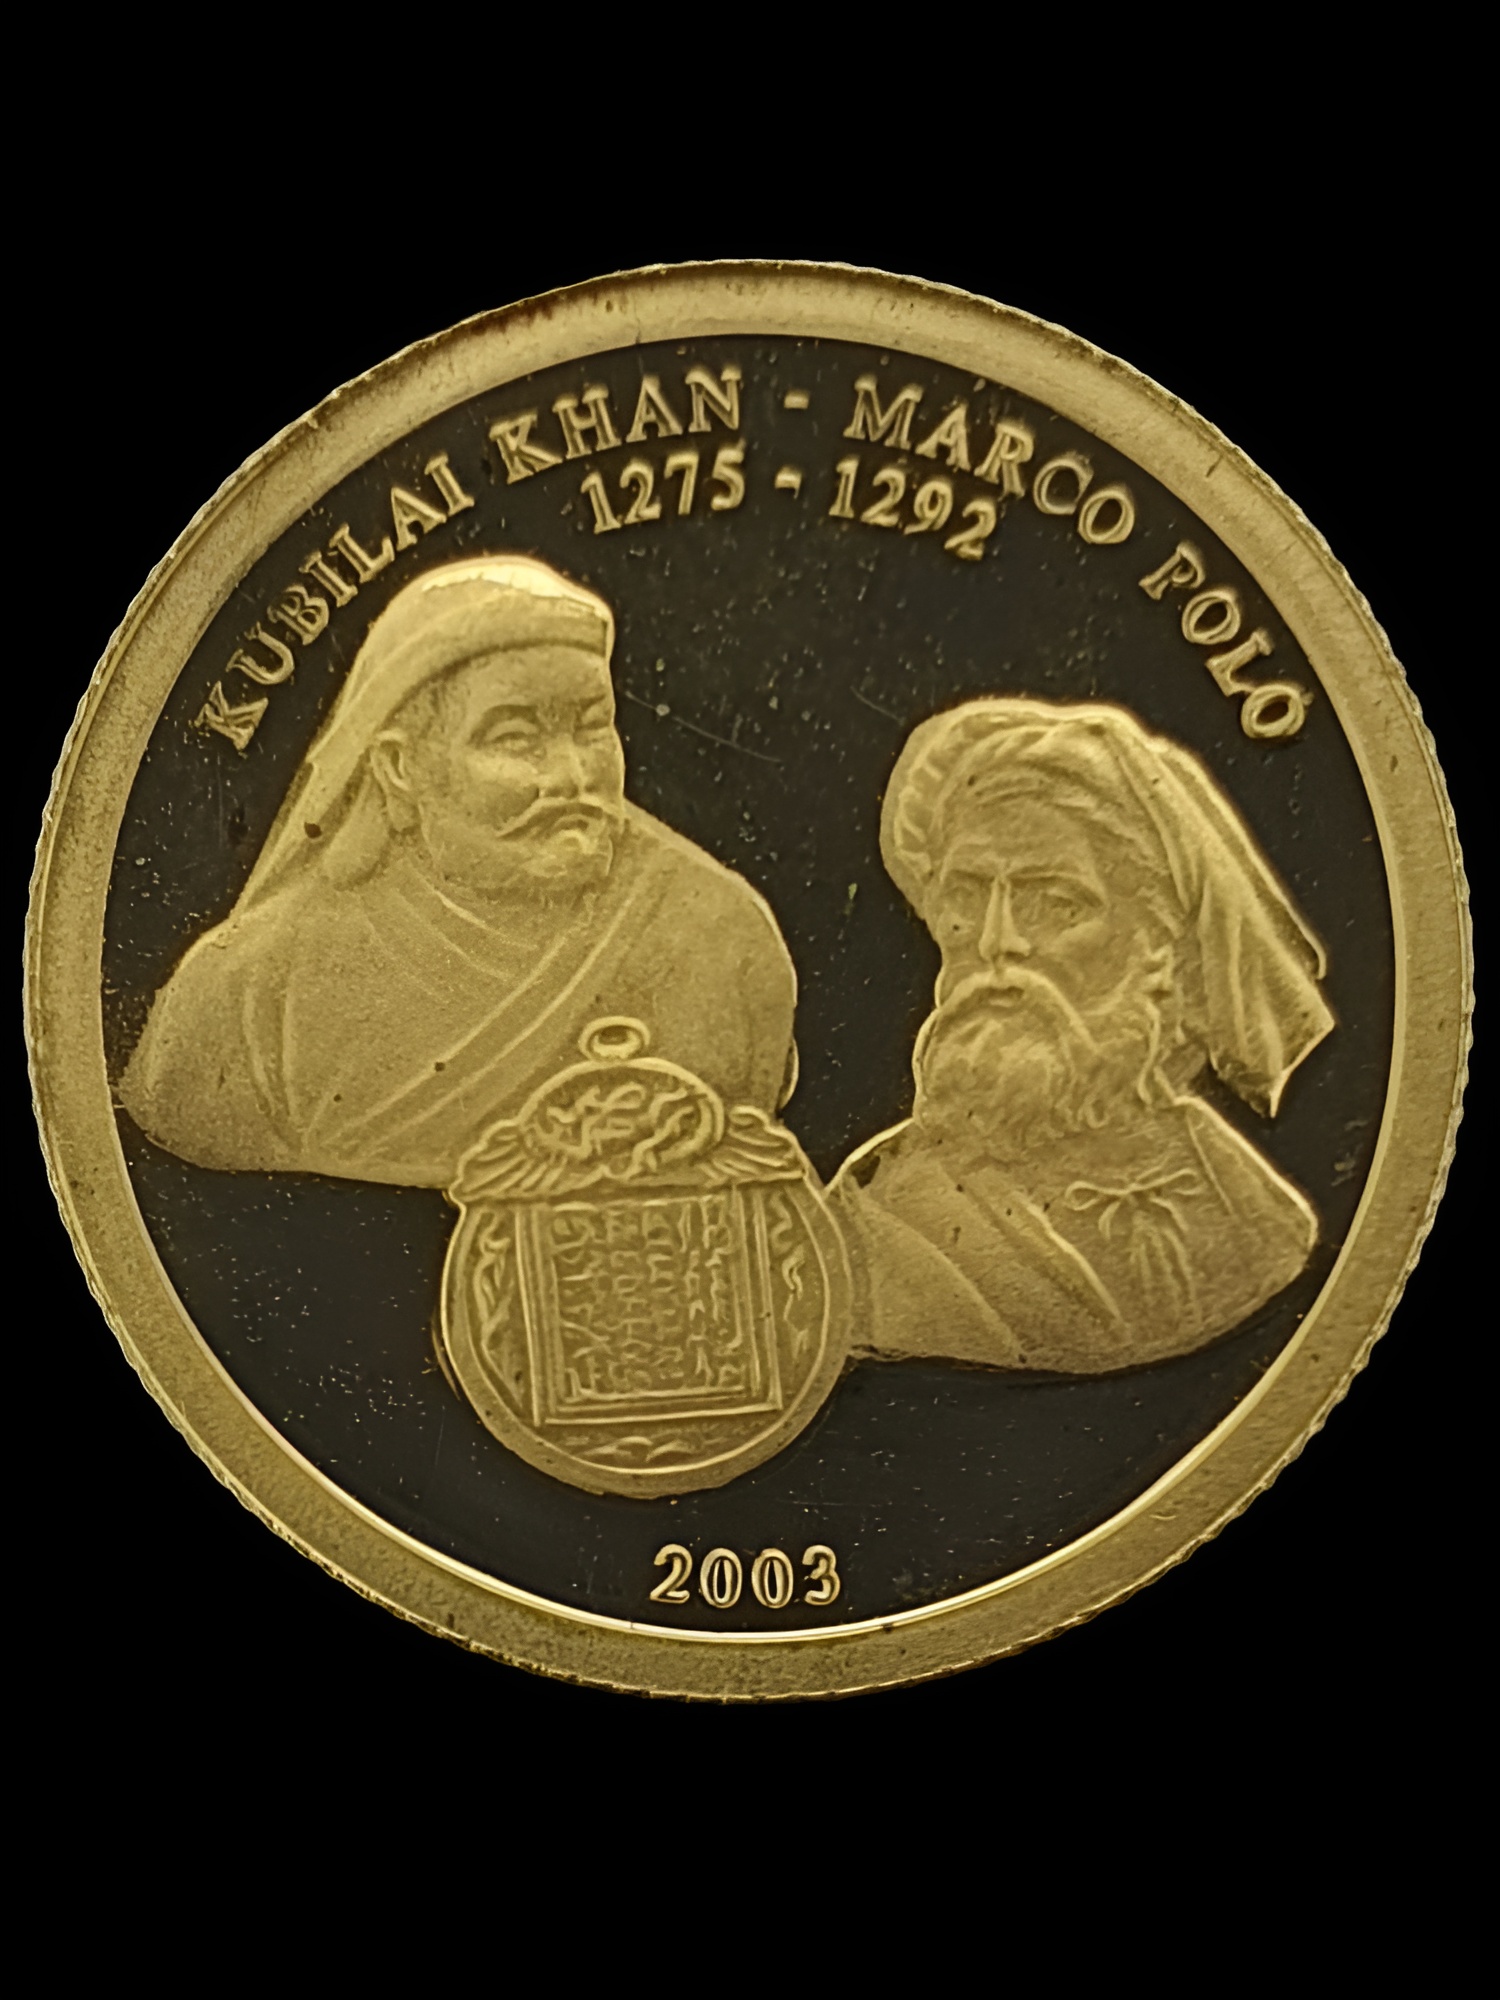 2003 Kubilai Khan Marco Polo 500 Tögrög Mongolian Gold Coin